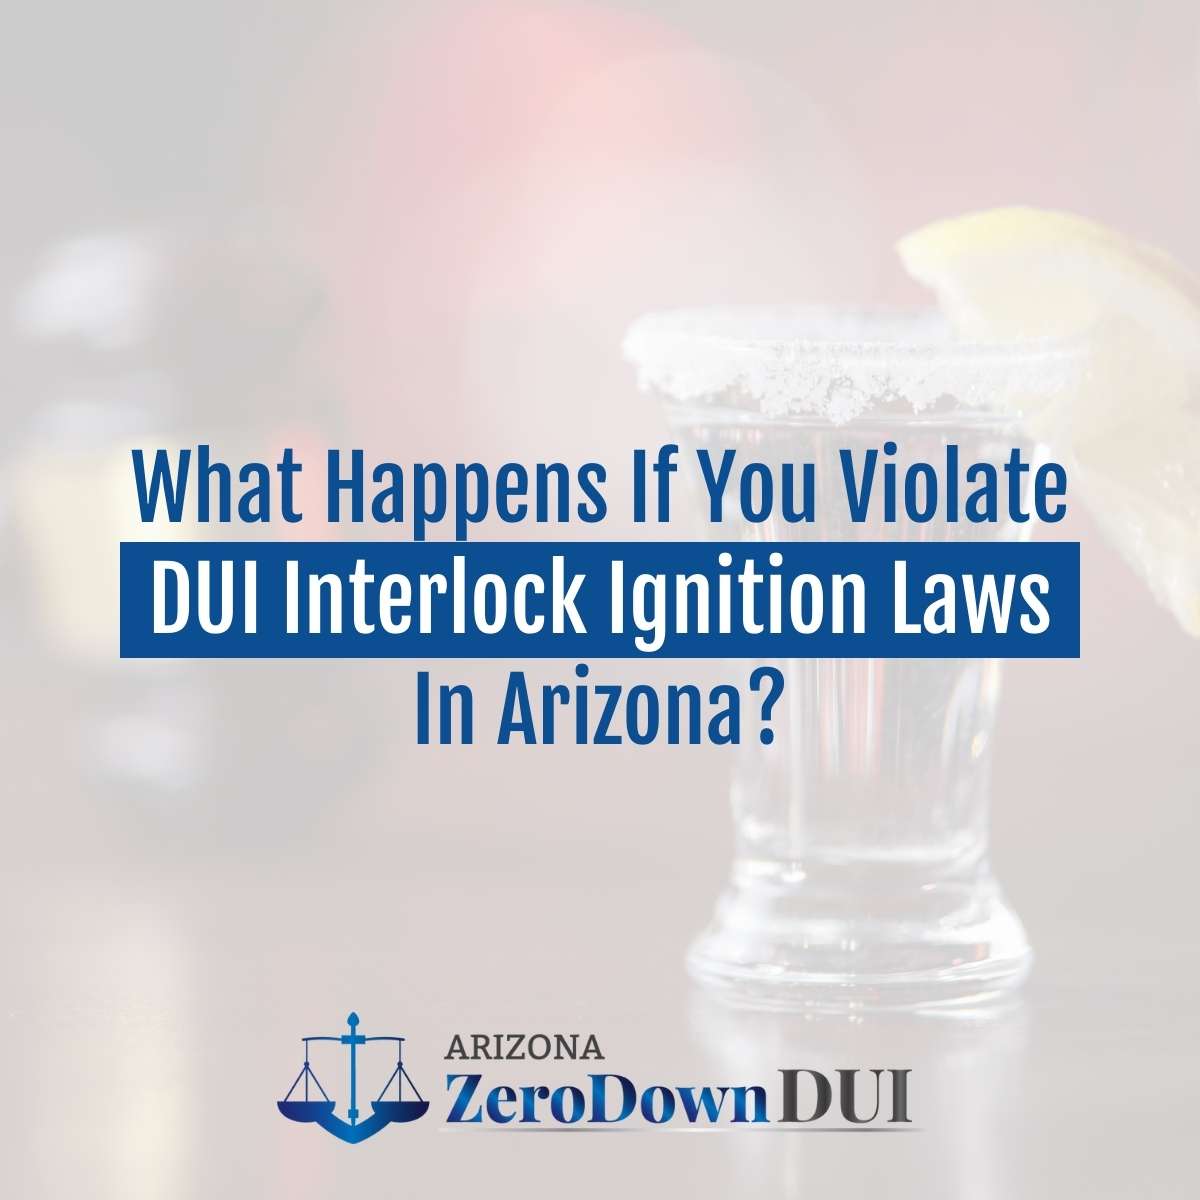 Violating DUI interlock ignition laws in Arizona